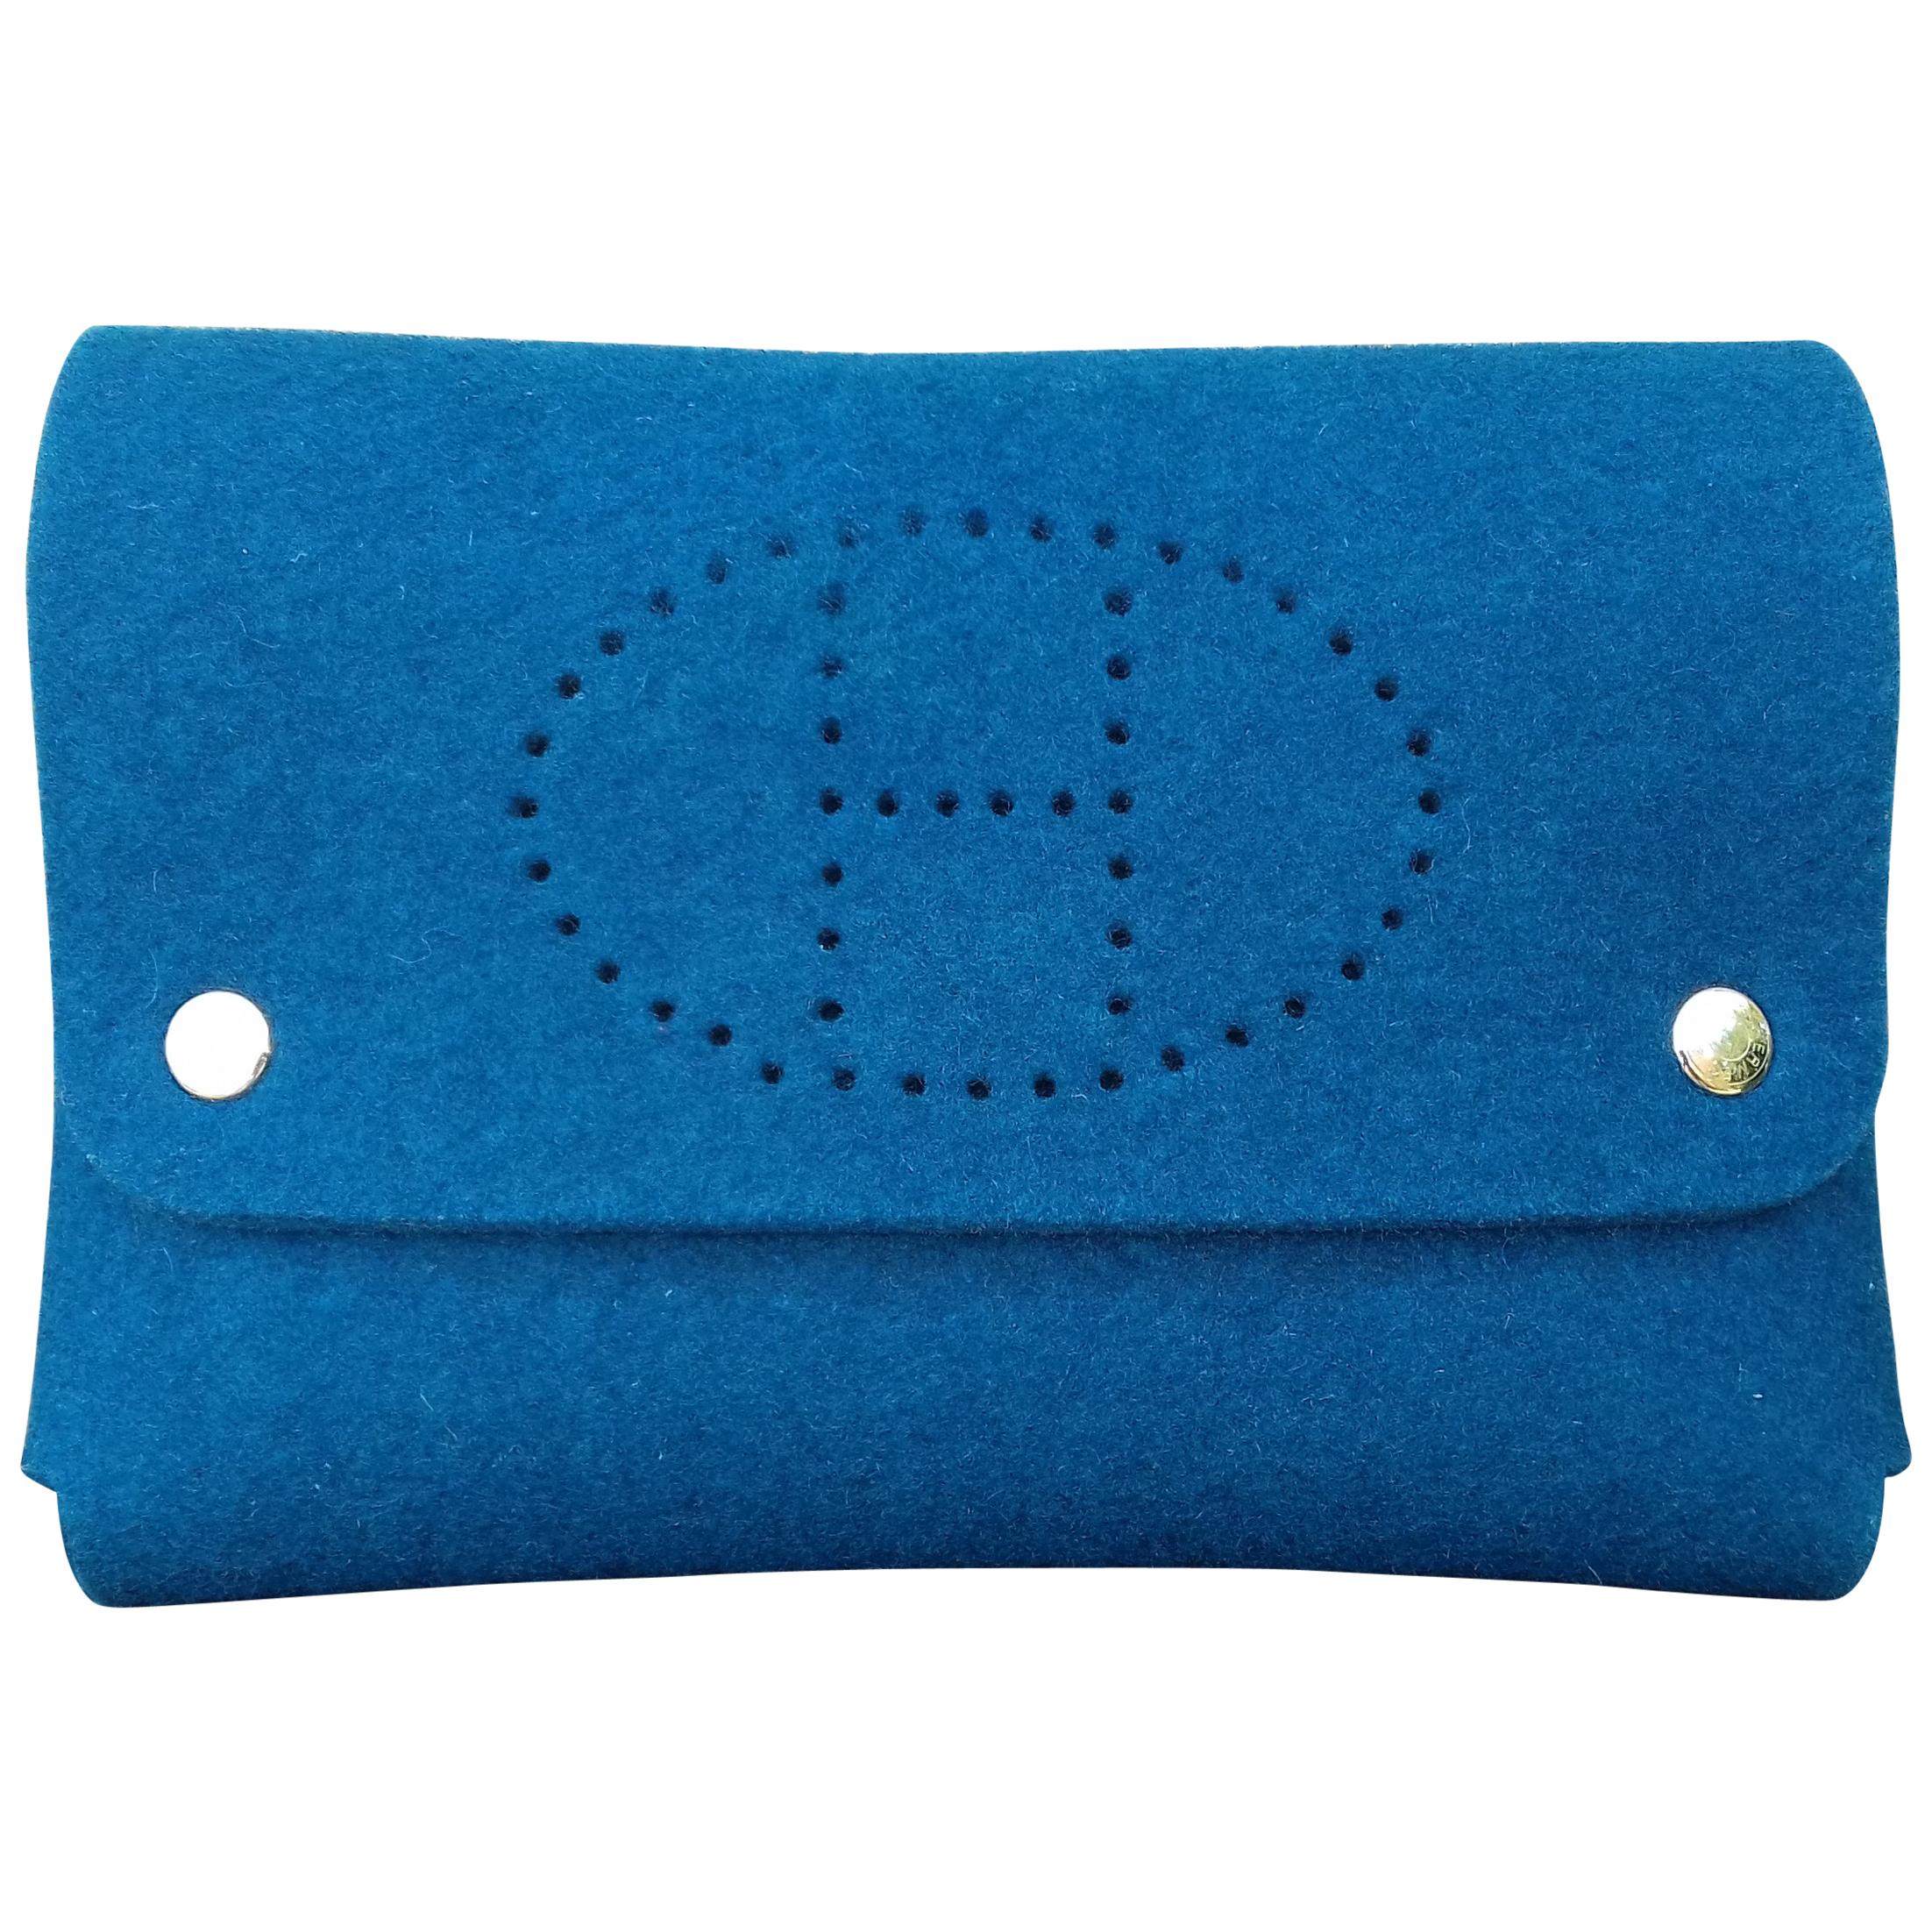 Hermès Felt Pouch Bag Belt Purse Playing Cards Case Blue in Box